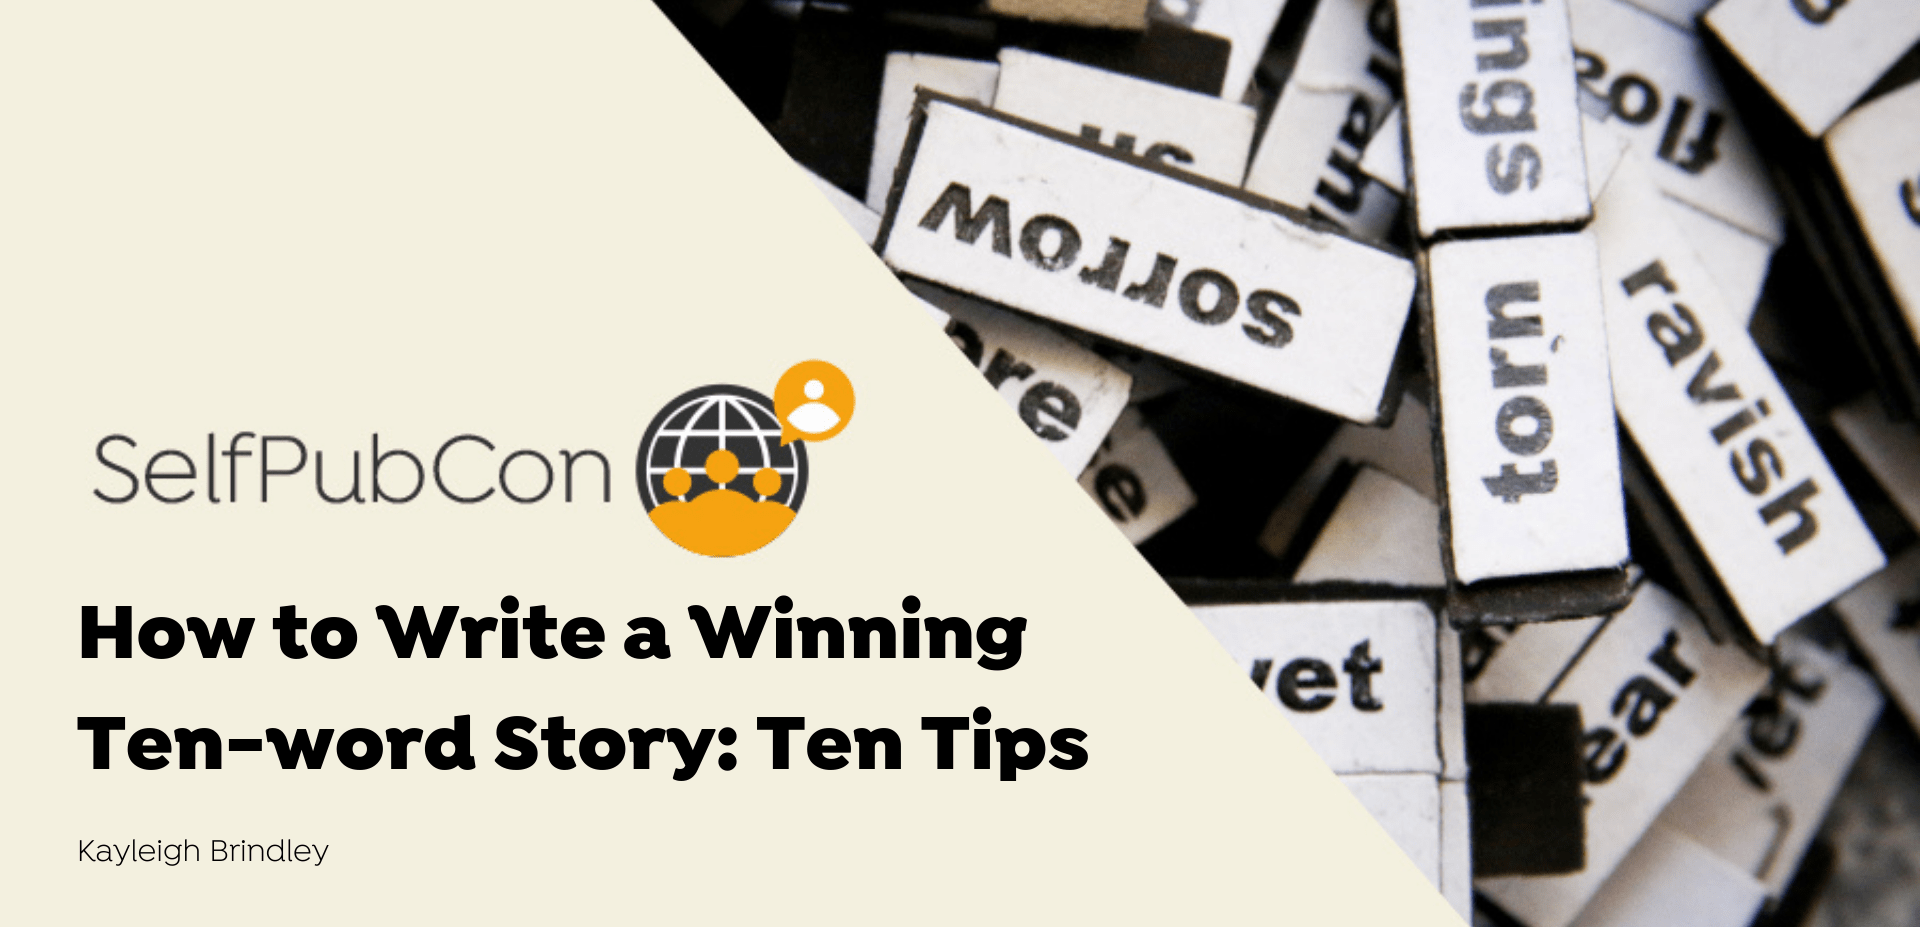 How To Write A Winning Ten-word Story: Ten Tips